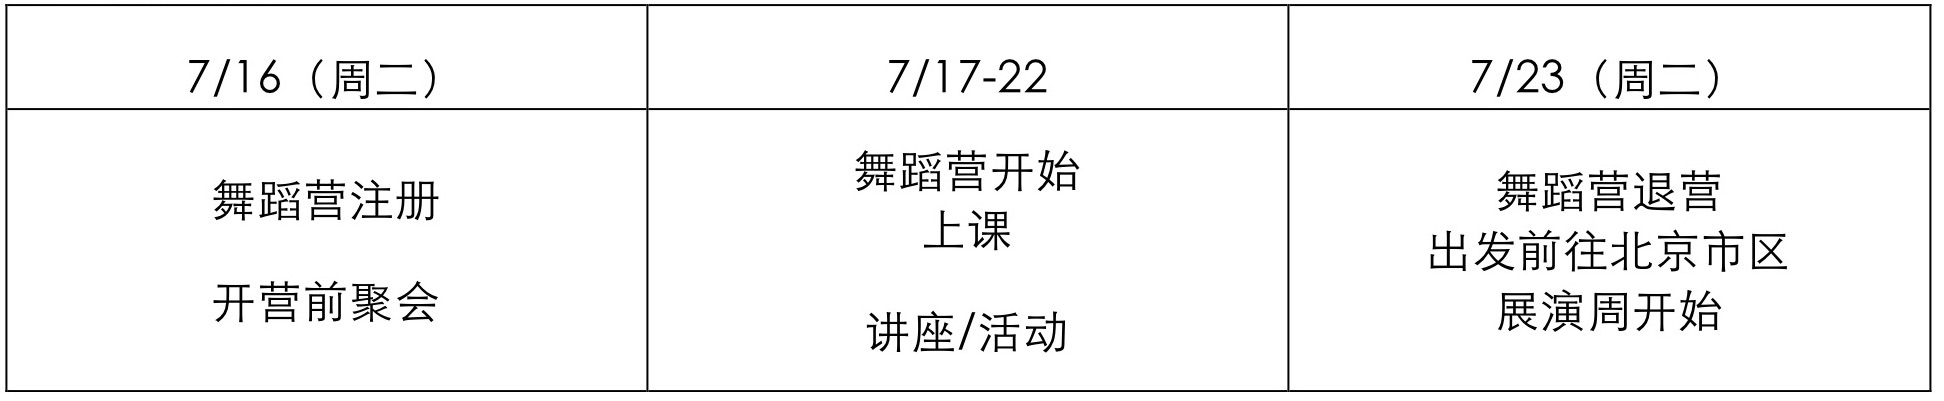 Camp-19_Enrollment招生(中)_2019-03-08（被拖移）.jpg